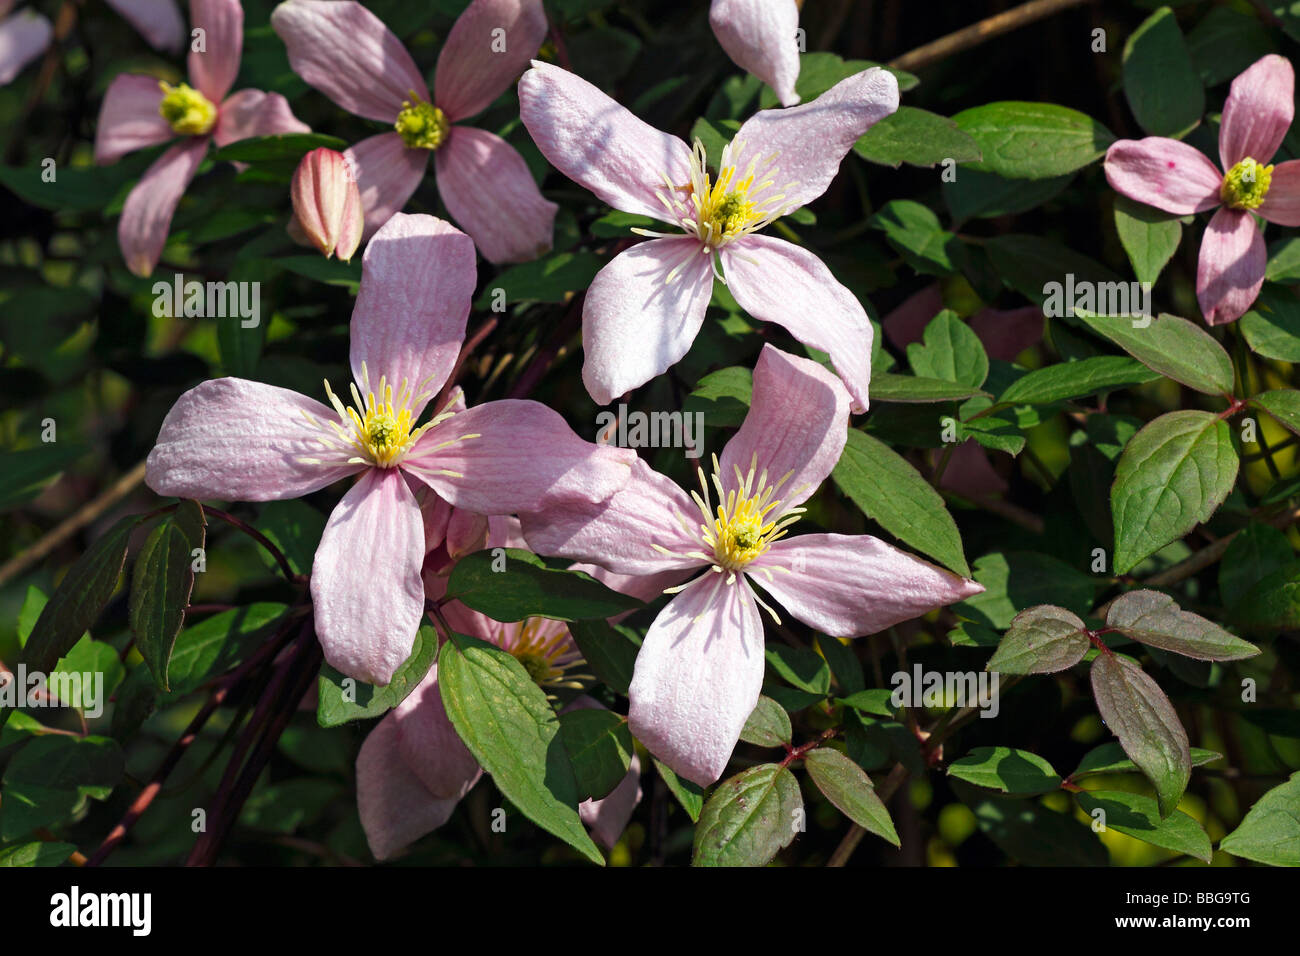 Blühende Sorte Clematis Spooneri Rosea (Clematis hybride Spooneri Rosea) Kletterpflanze Stockfoto